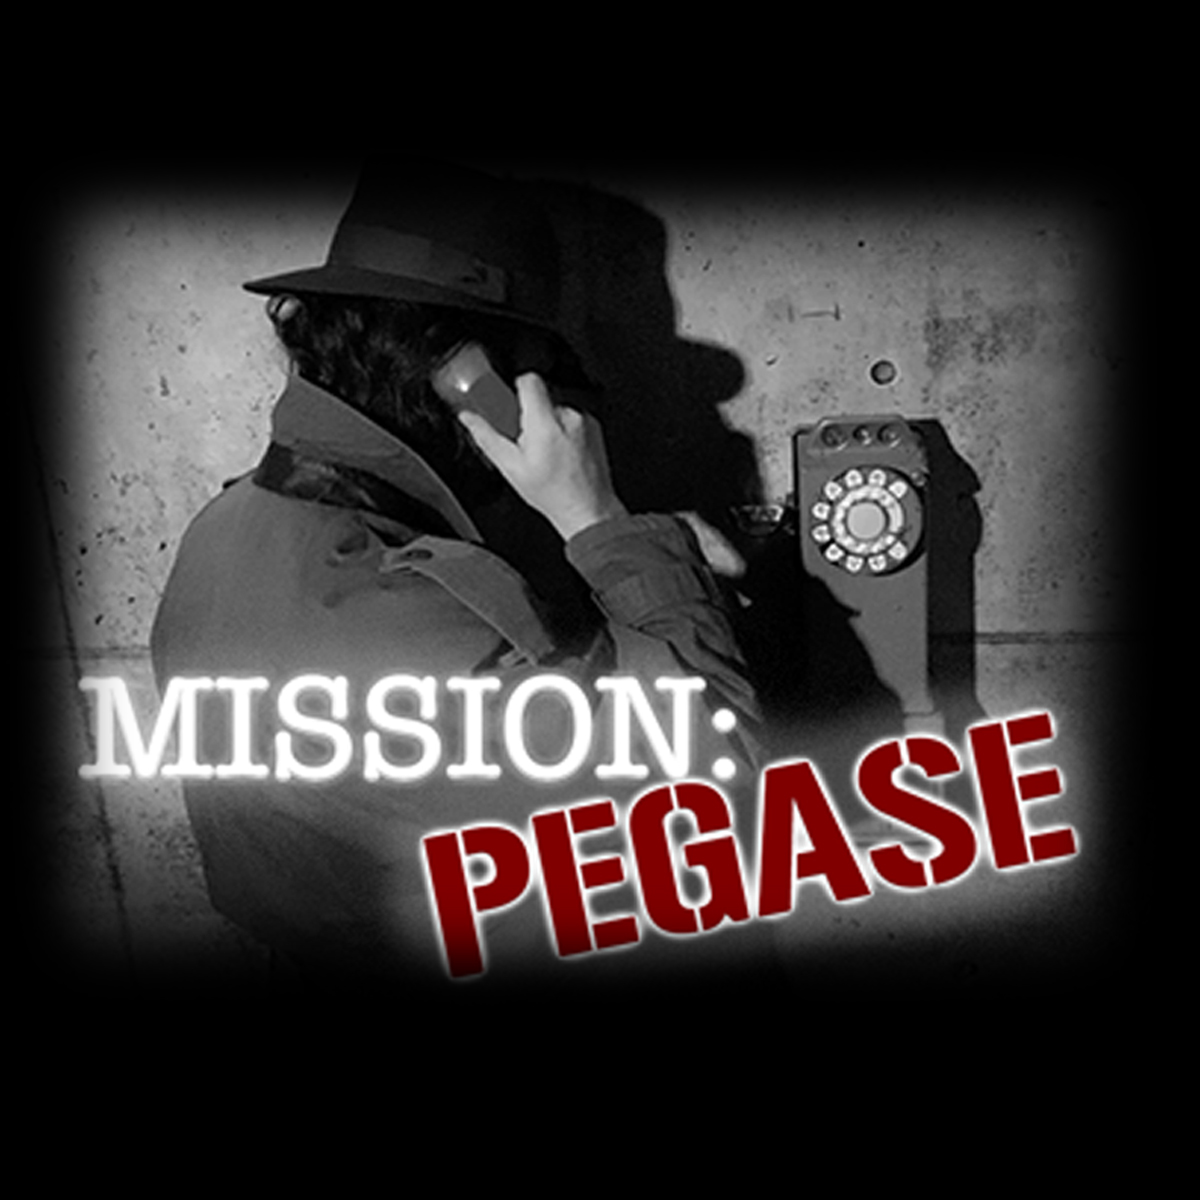 Mission: PEGASE